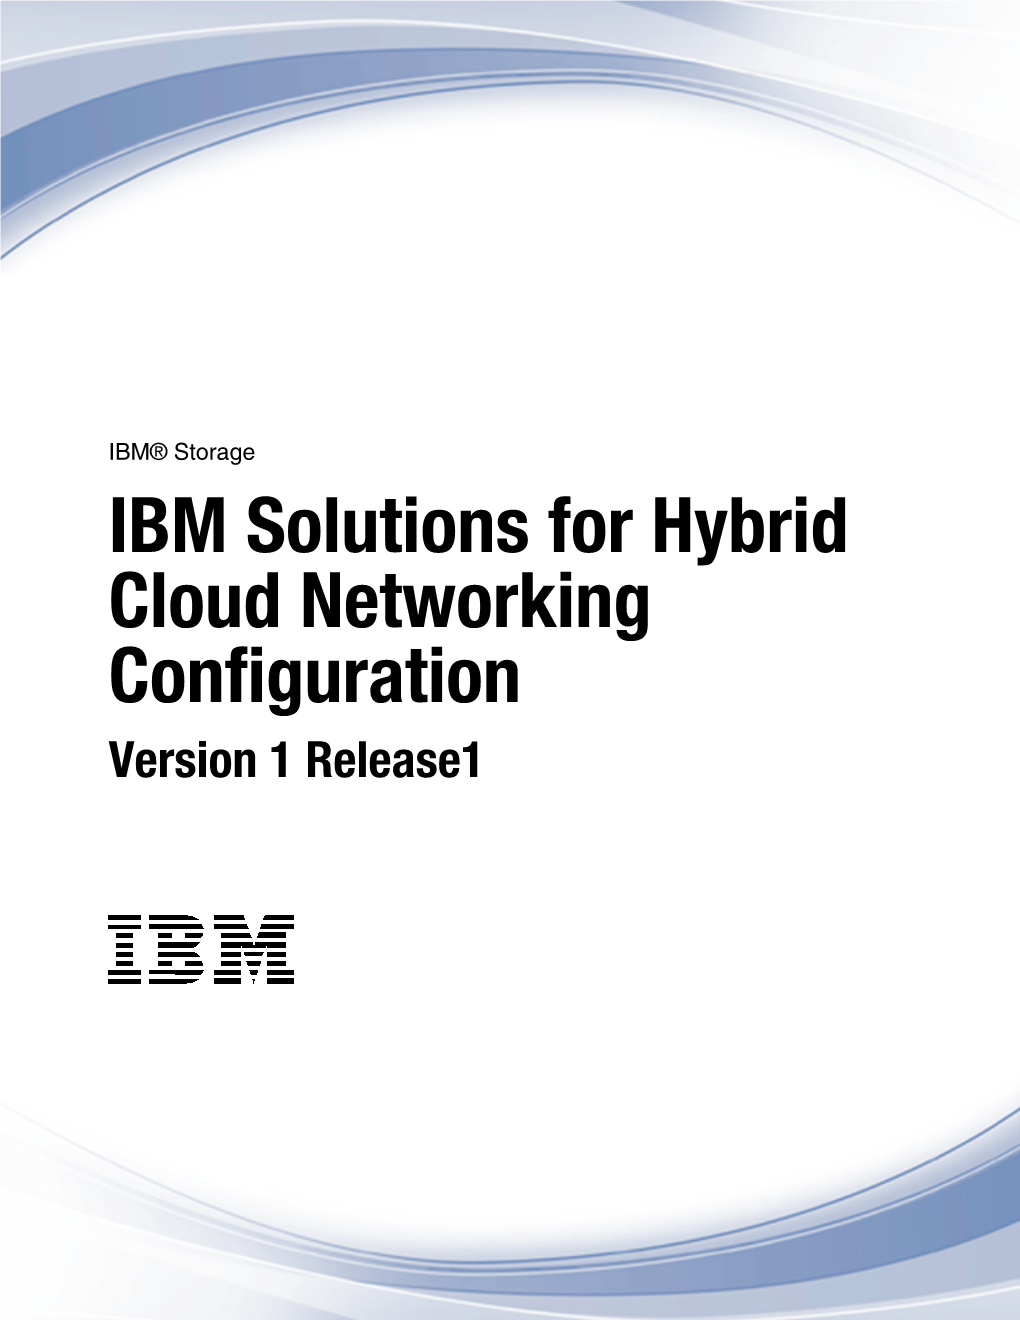 IBM Cloud: Configuring Site-To-Site Ipsec VPN for Hybrid Cloud Connectivity